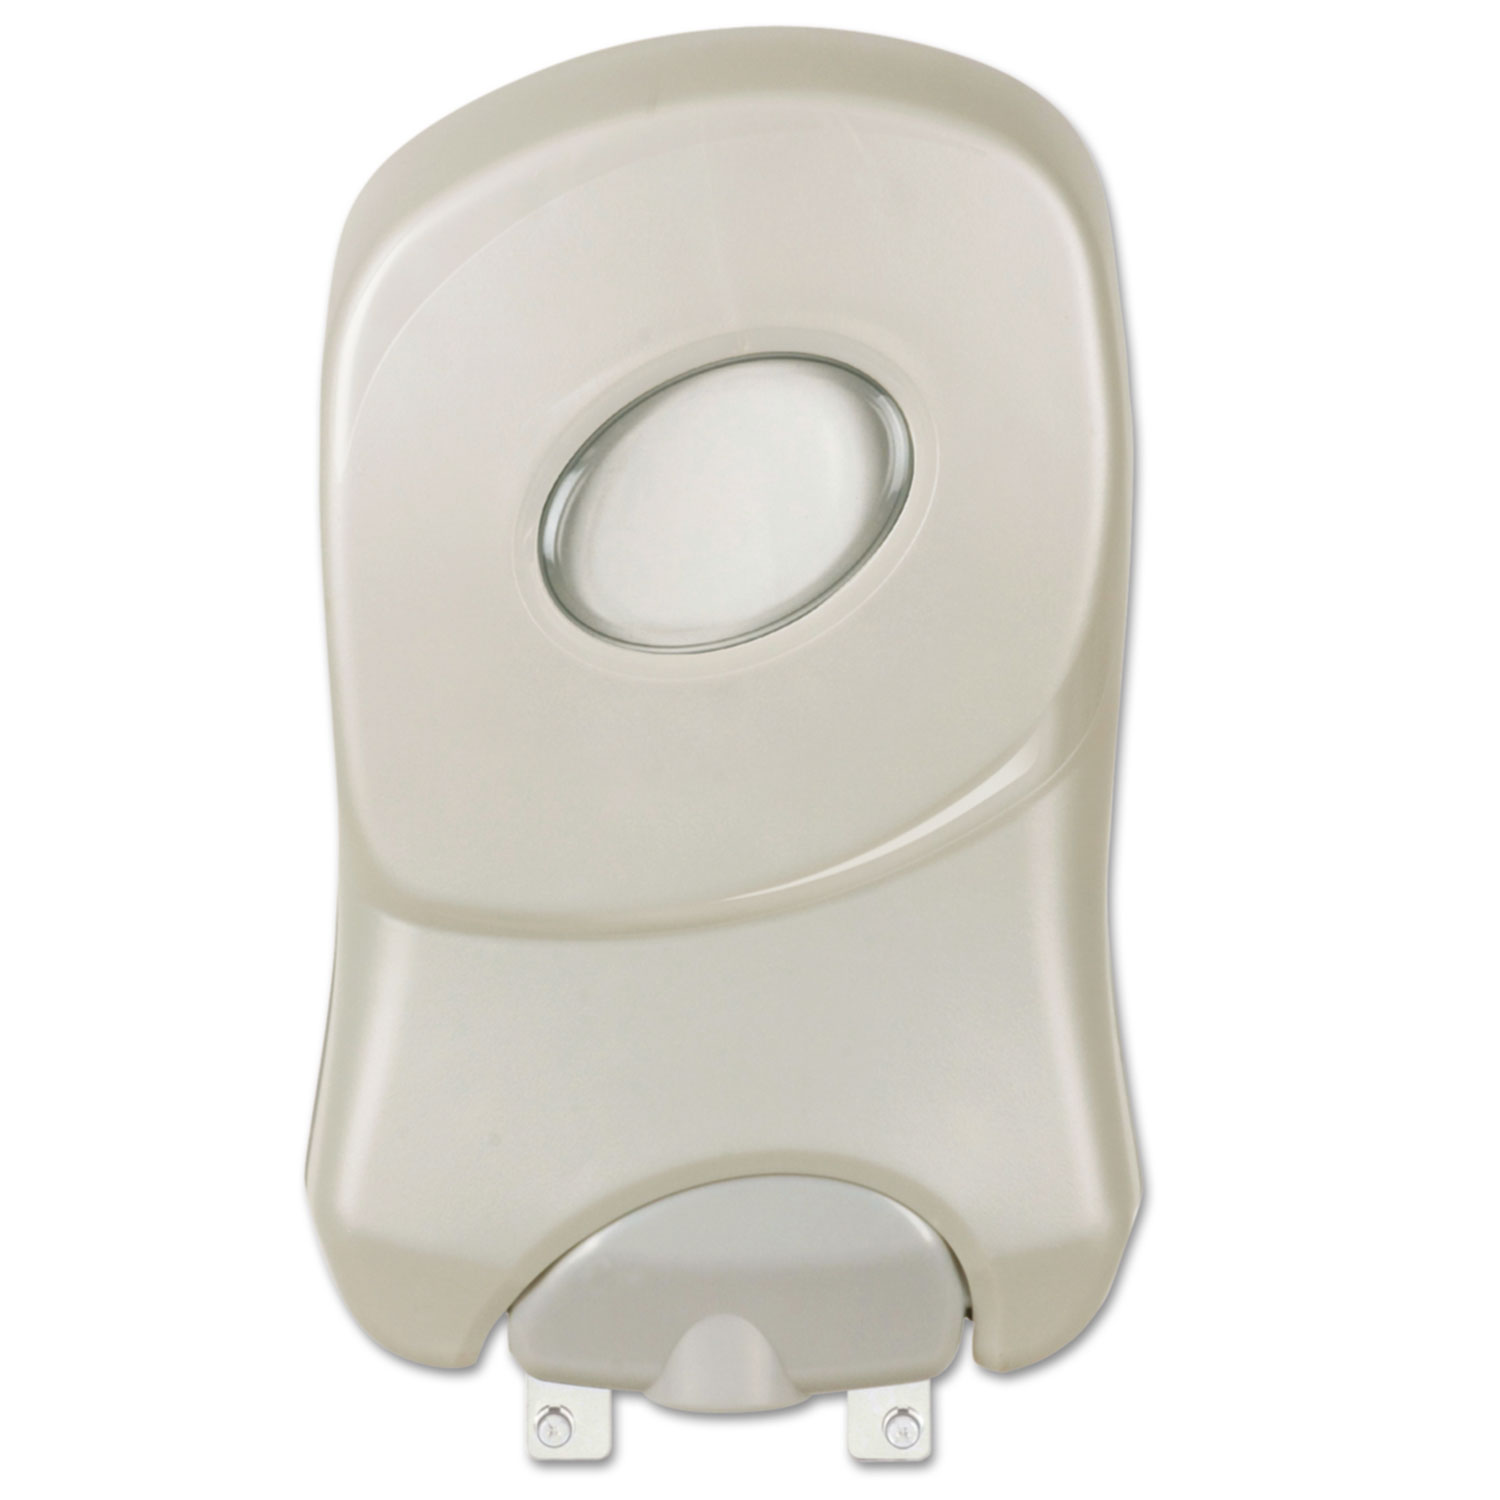  Dial Professional 1700004953 Duo Manual Soap Dispenser, 1250 mL, 7.25 x 3.88 x 11.75, Pearl (DIA04953) 